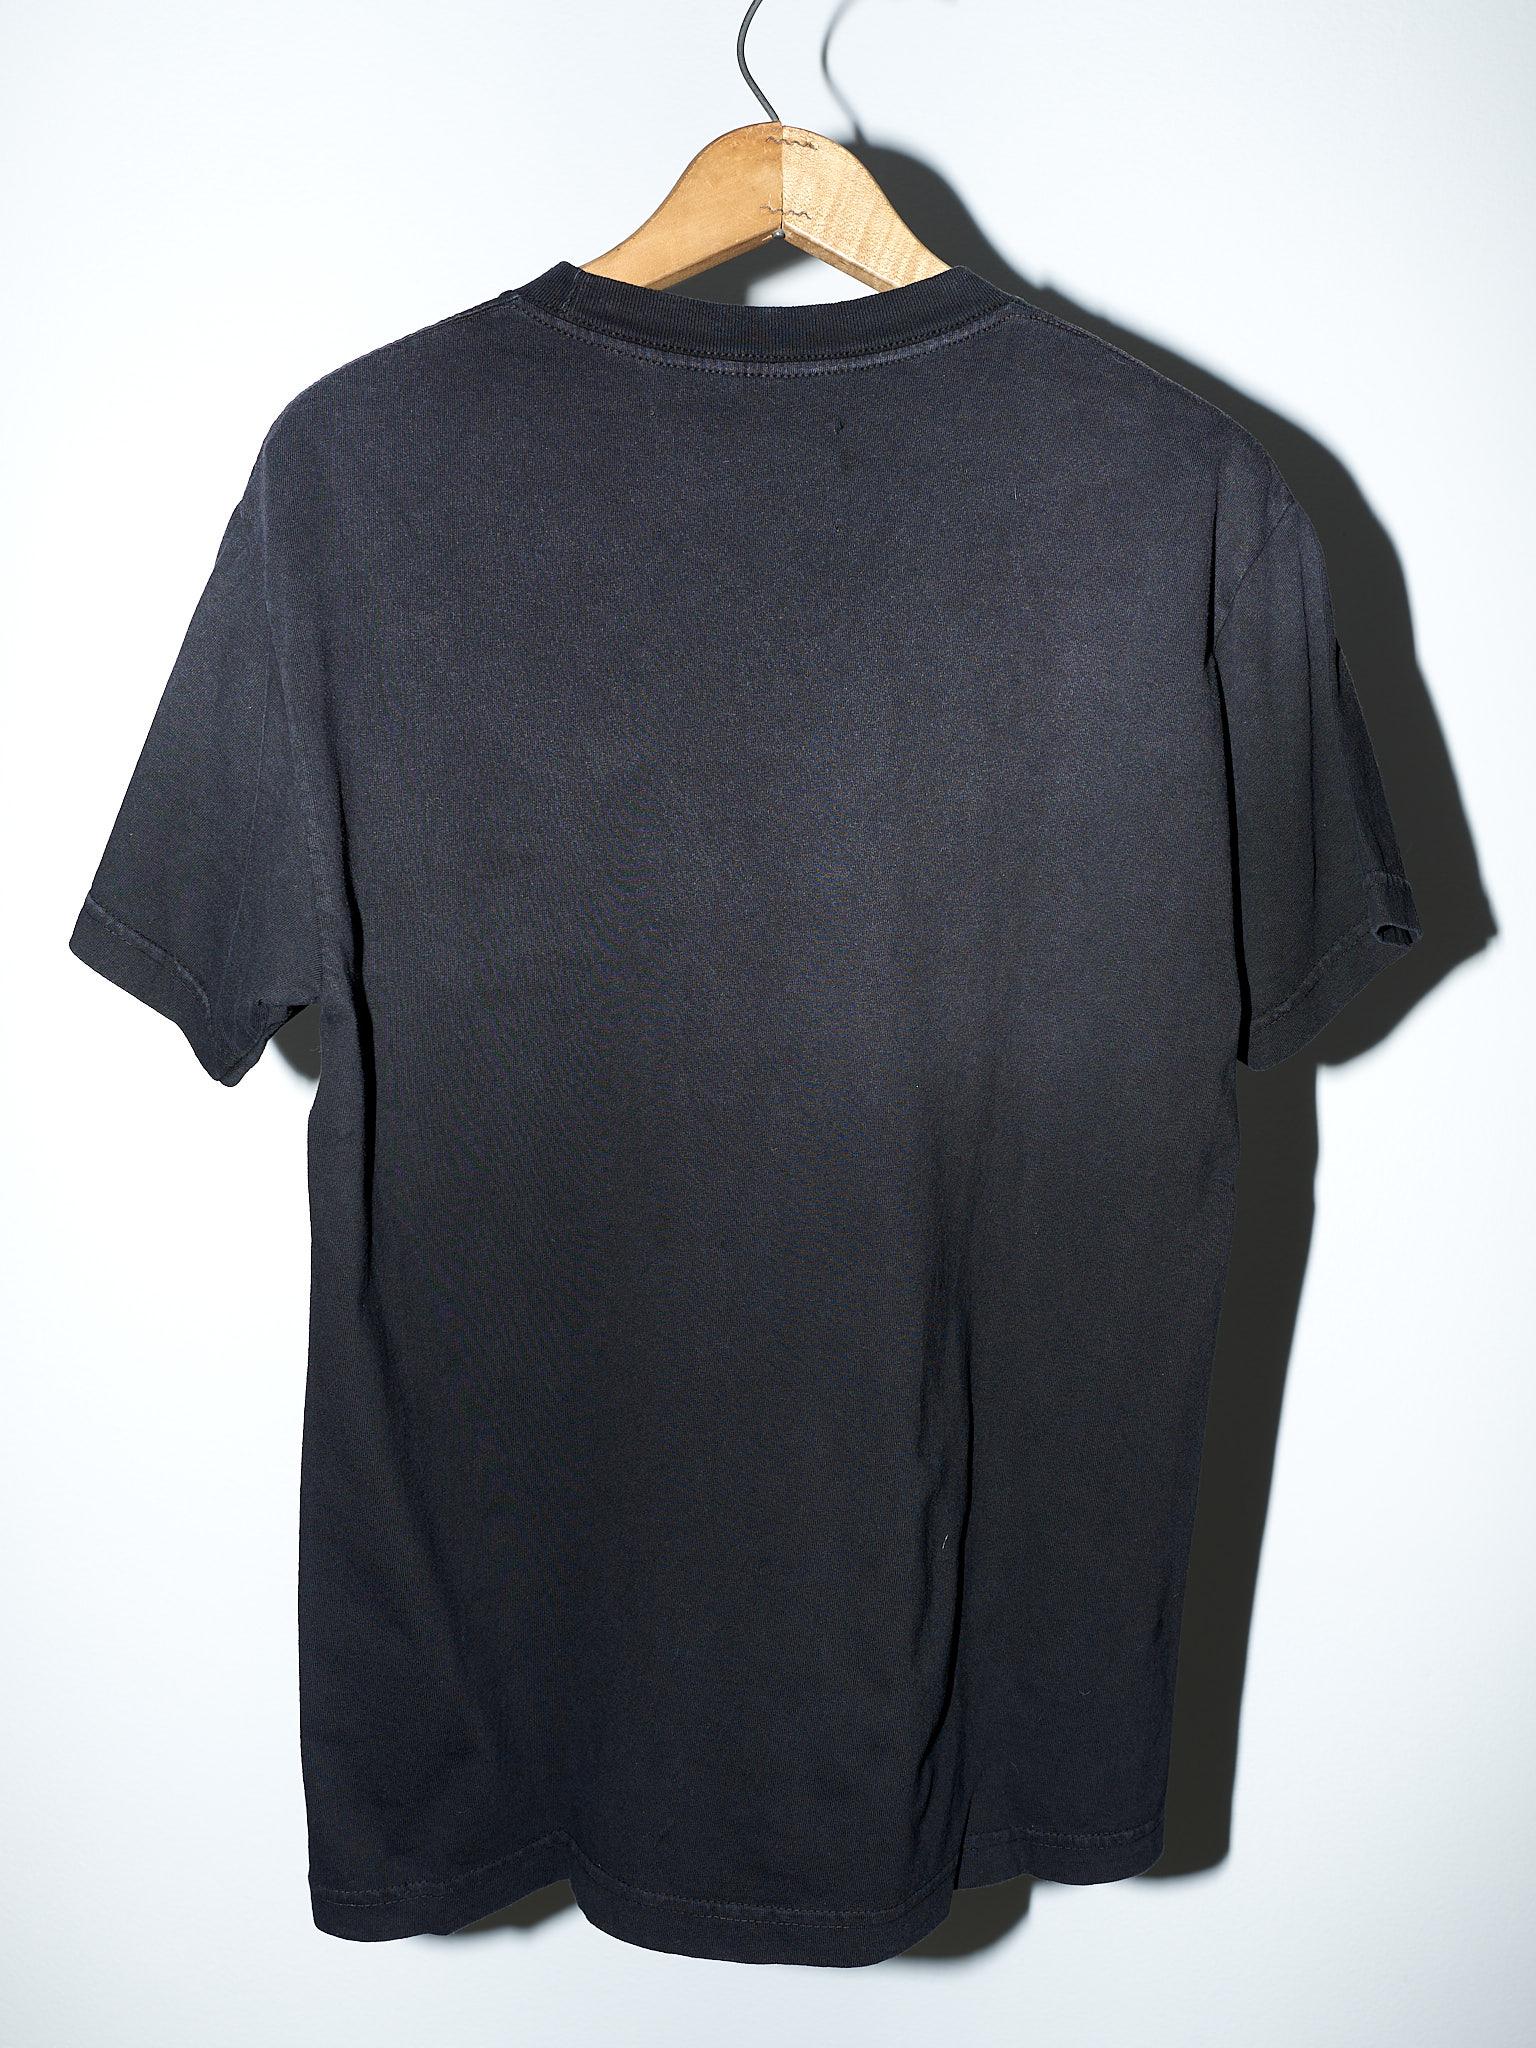 T-Shirt Black Embellished Sequin Silk Cotton Top J Dauphin 5